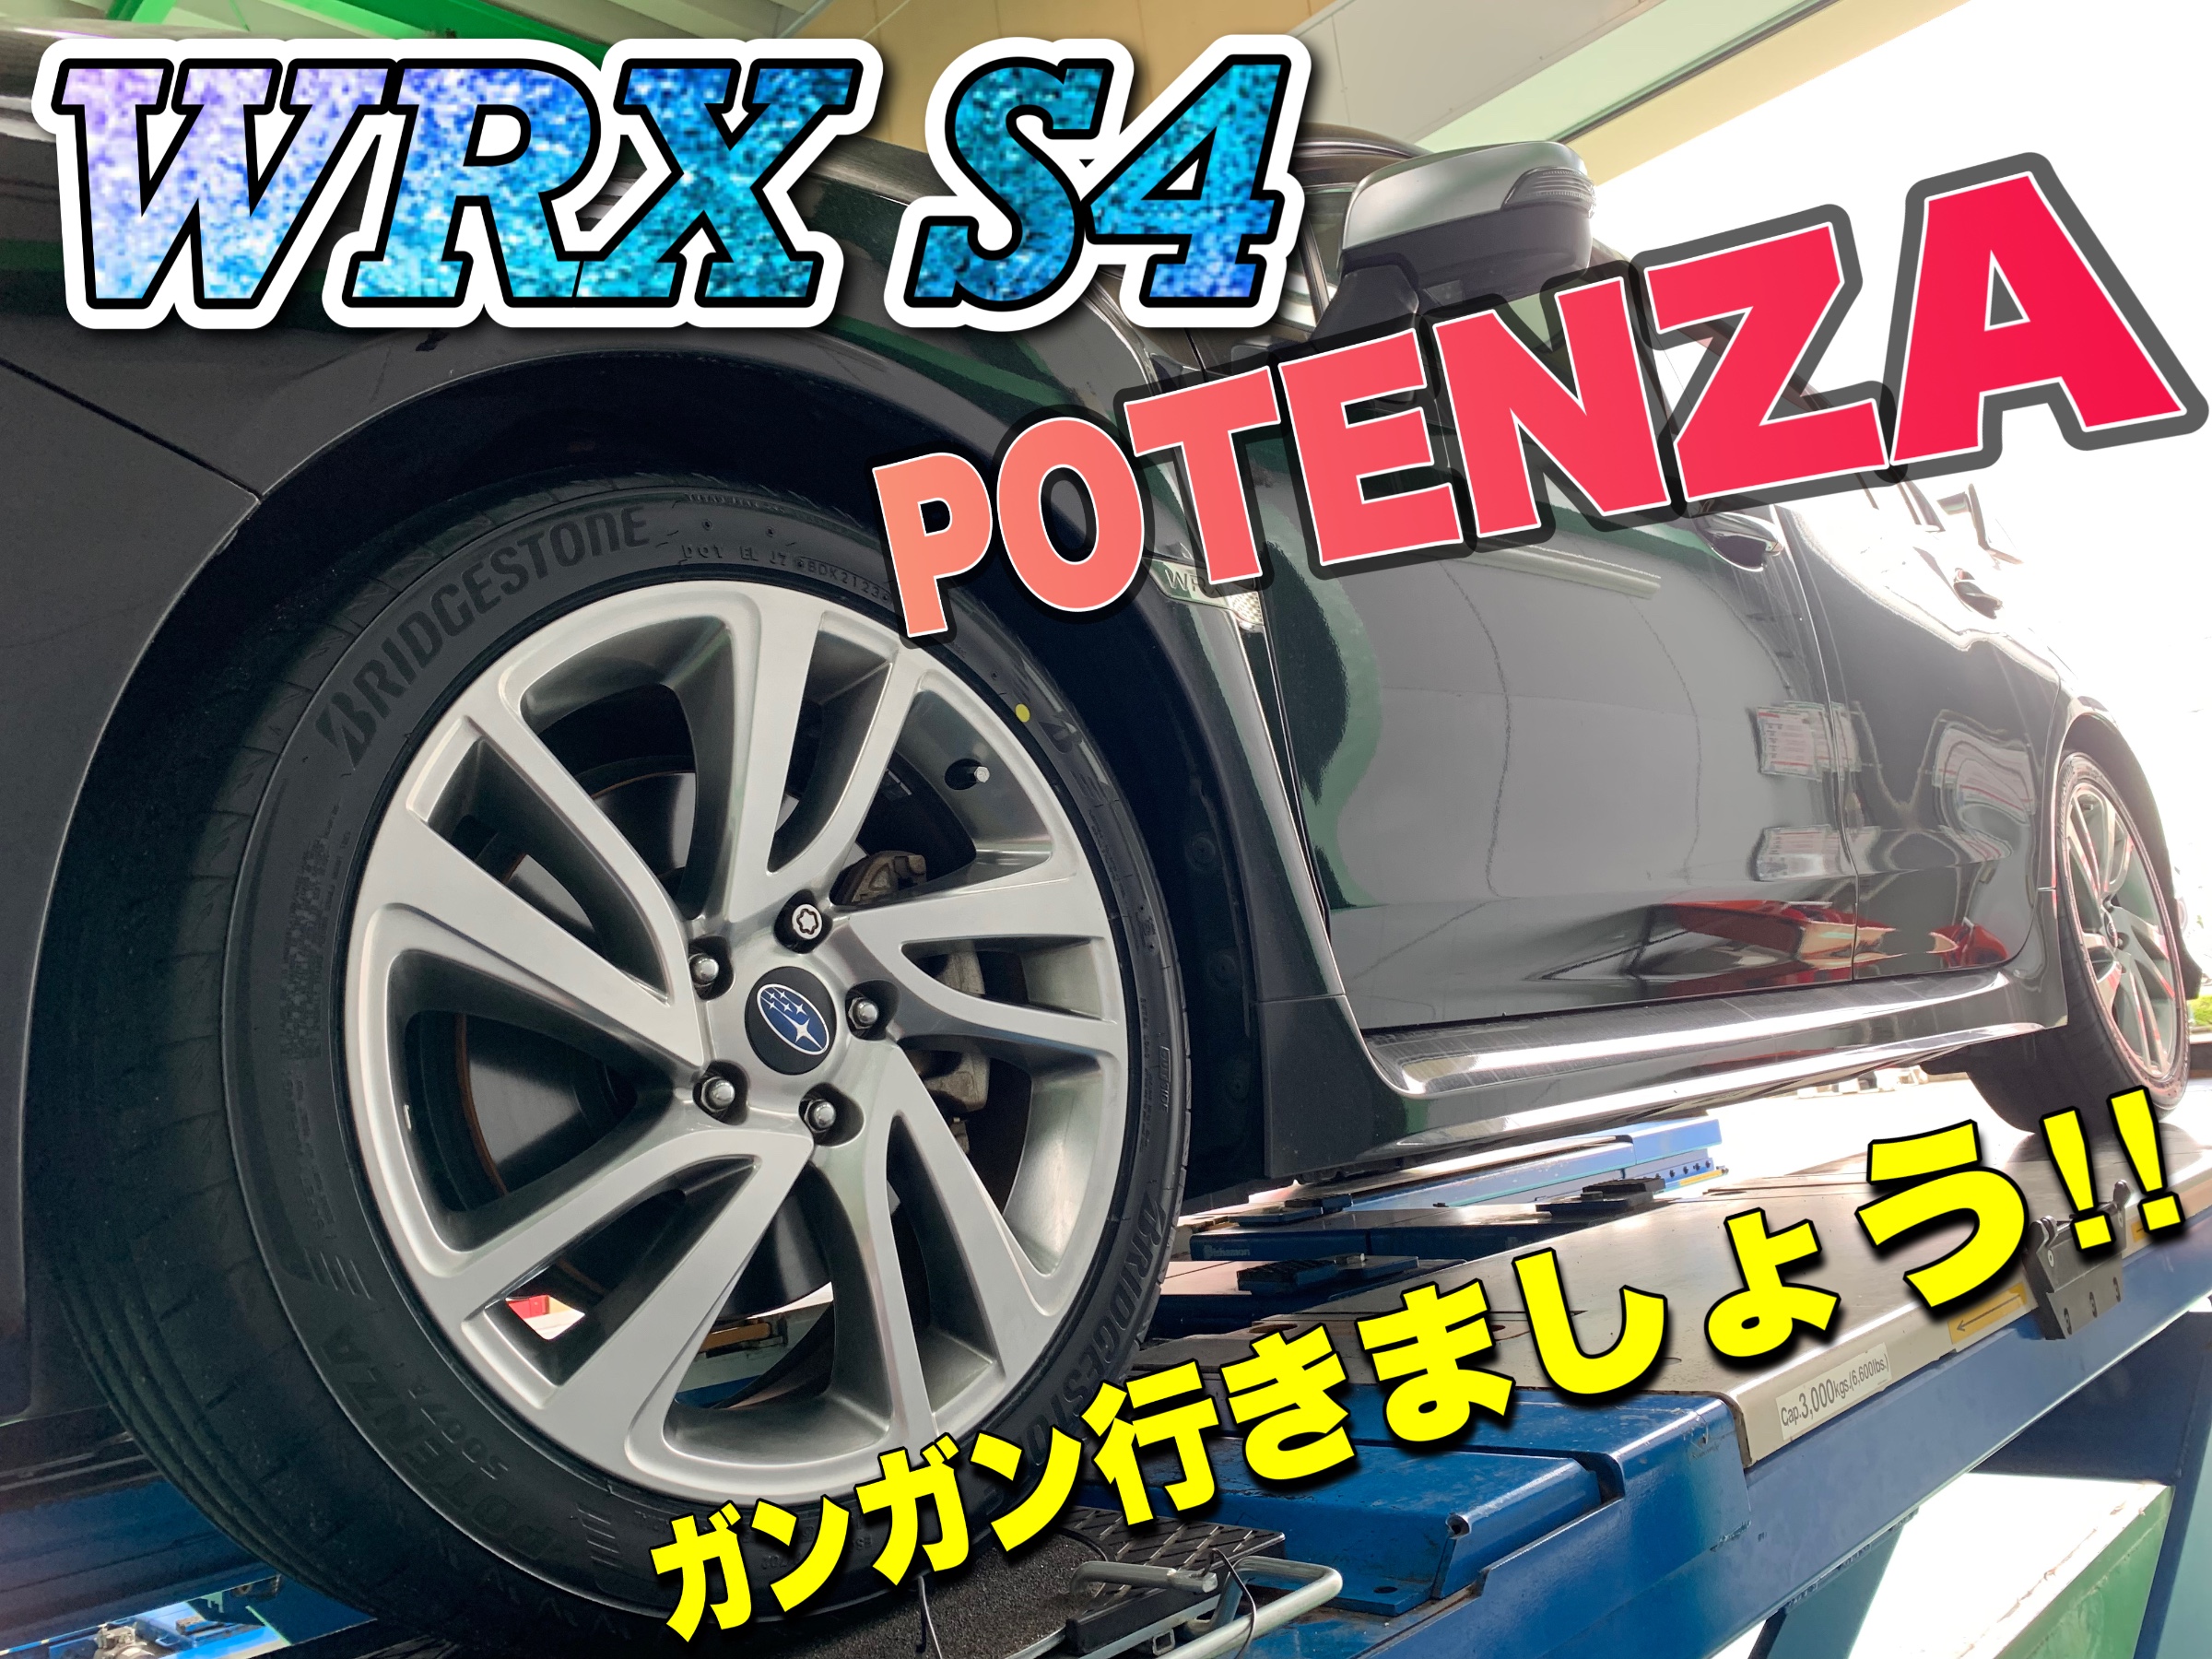 WRX S4 ポテンザS007A 225/45R18